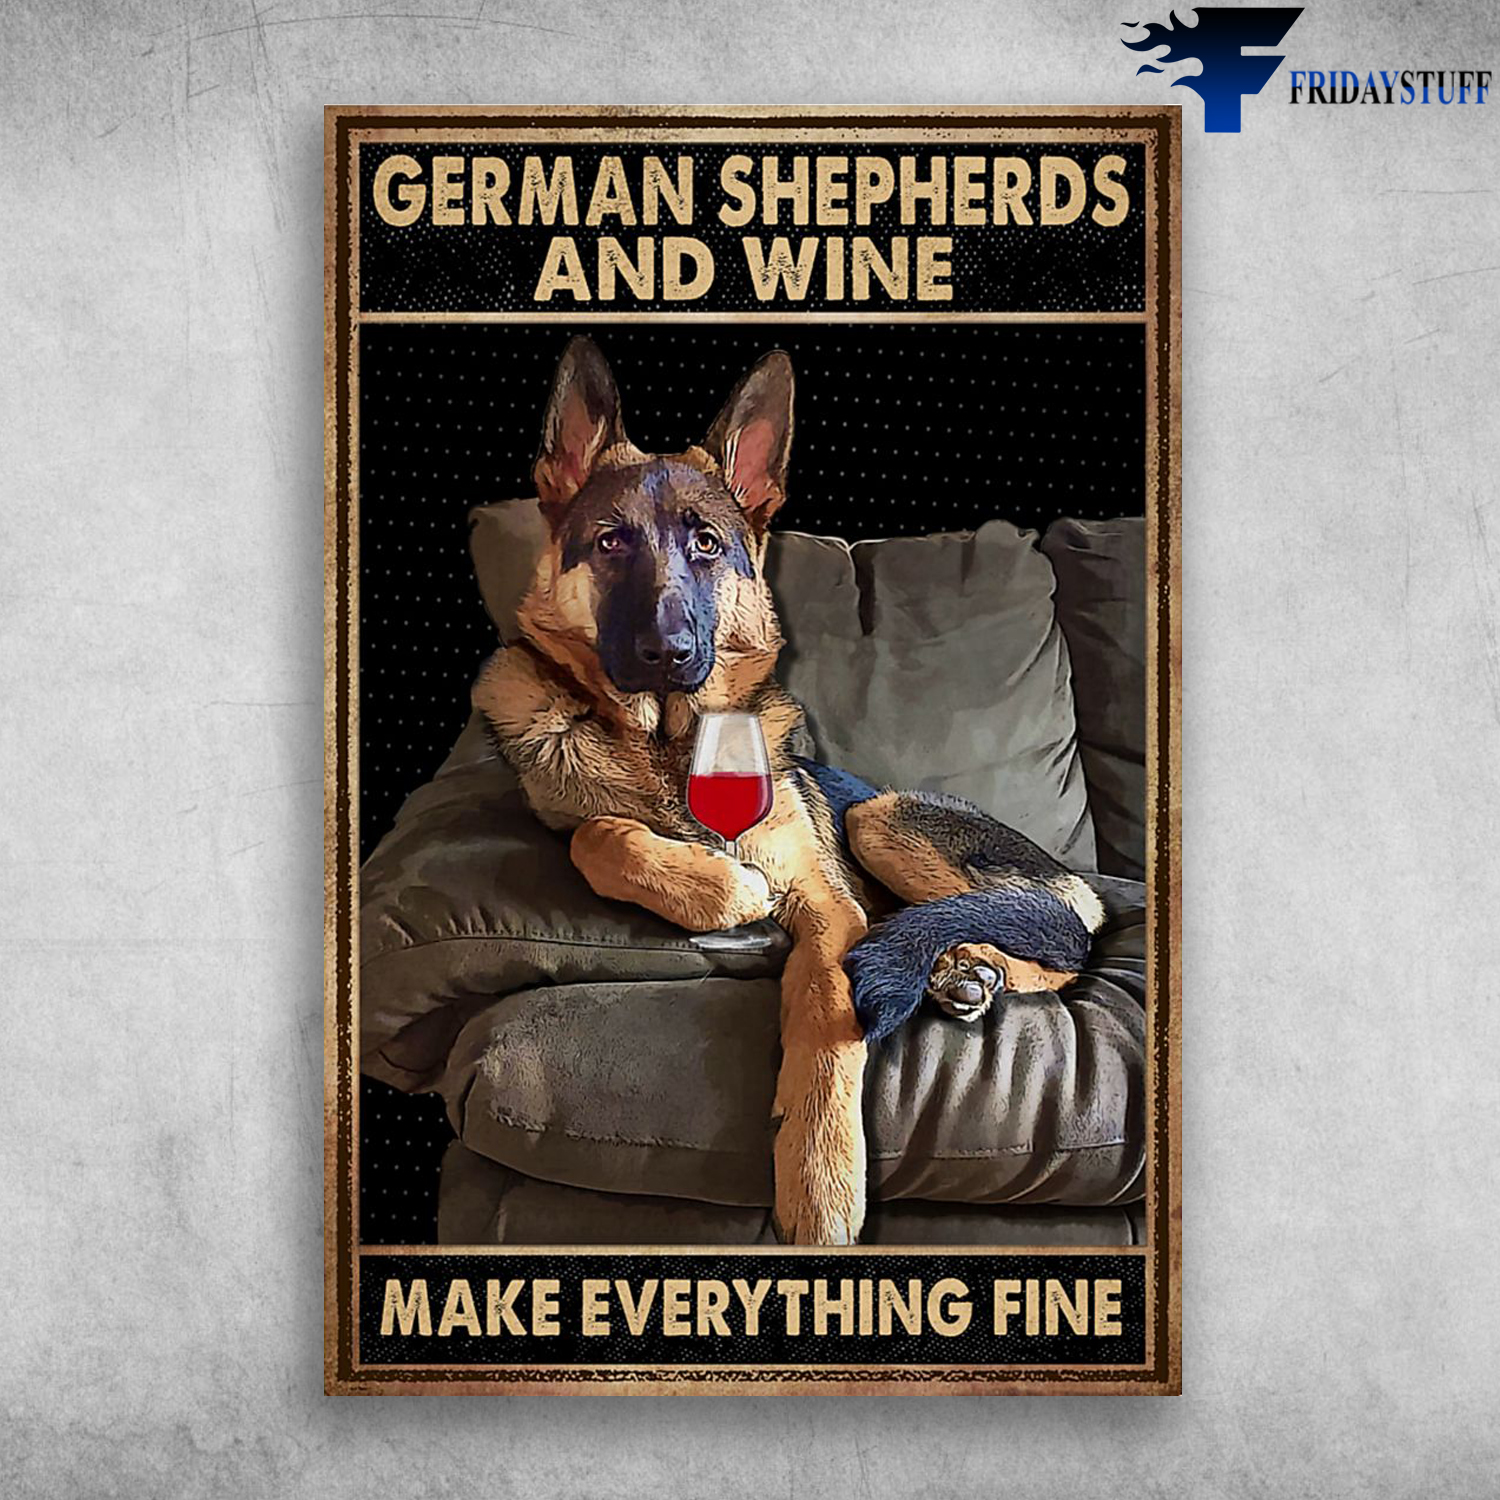 German Shepherds Dog - German Shepherds And Wine, Make Everything Fine